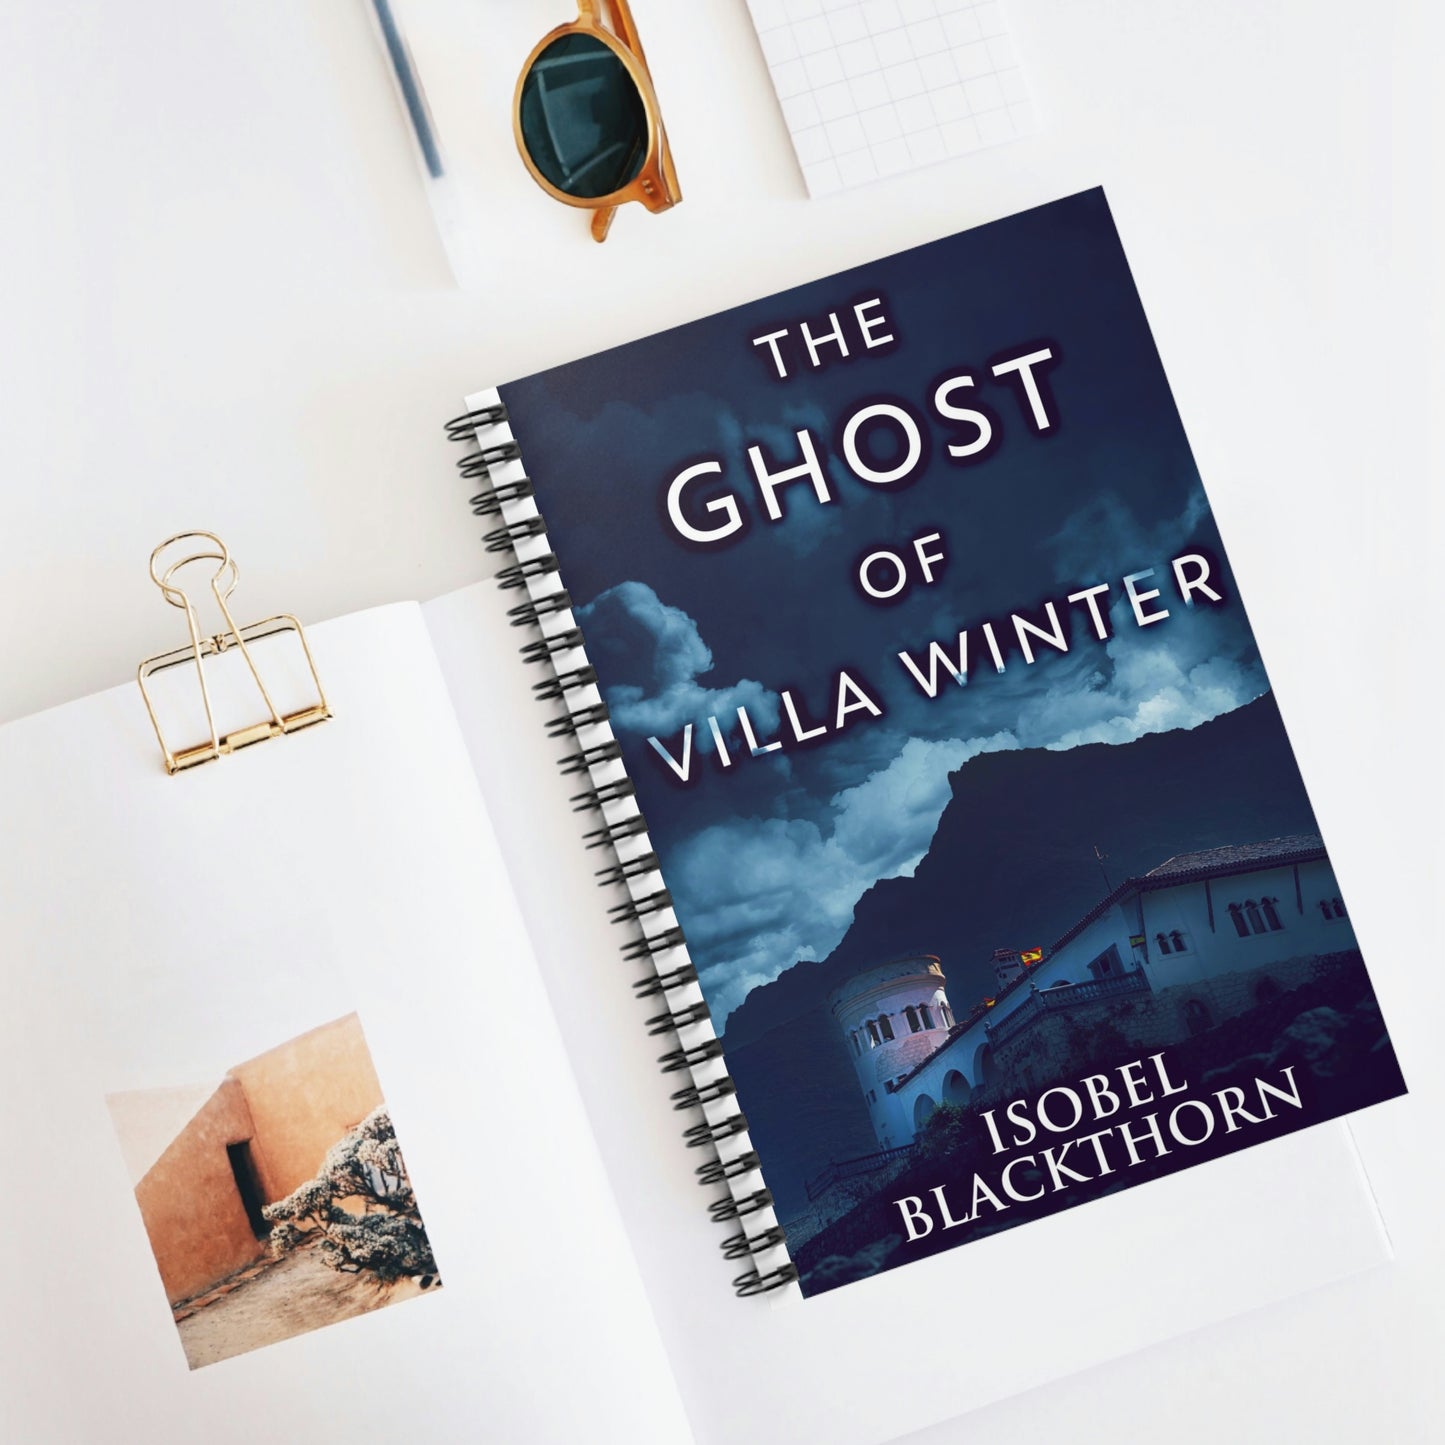 The Ghost Of Villa Winter - Spiral Notebook